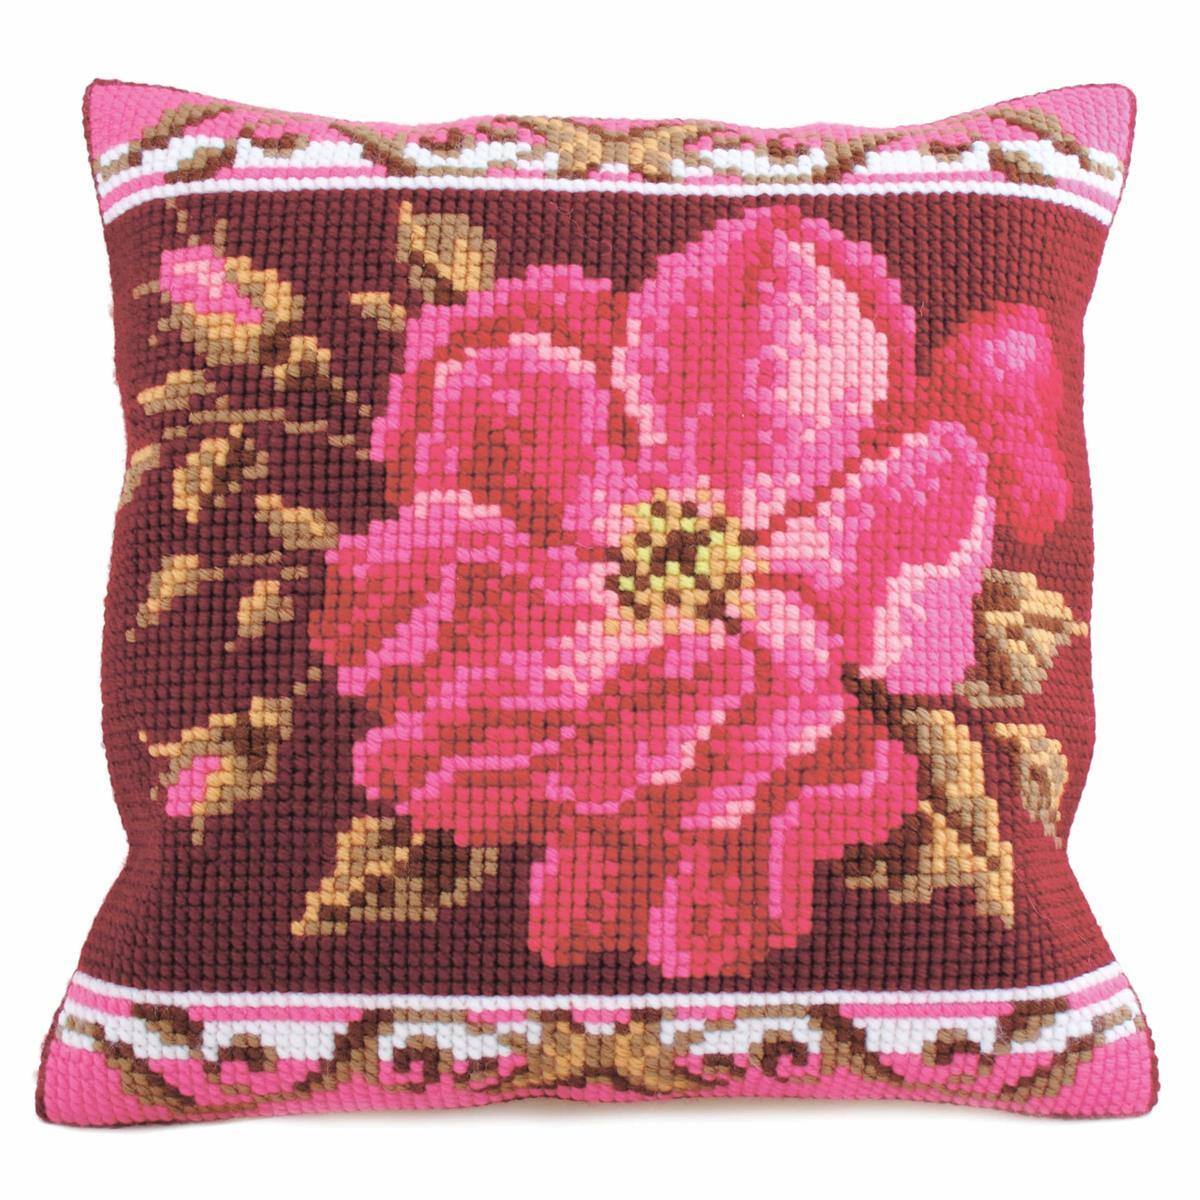 CdA stamped cross stitch kit cushion "Romantic Rose...